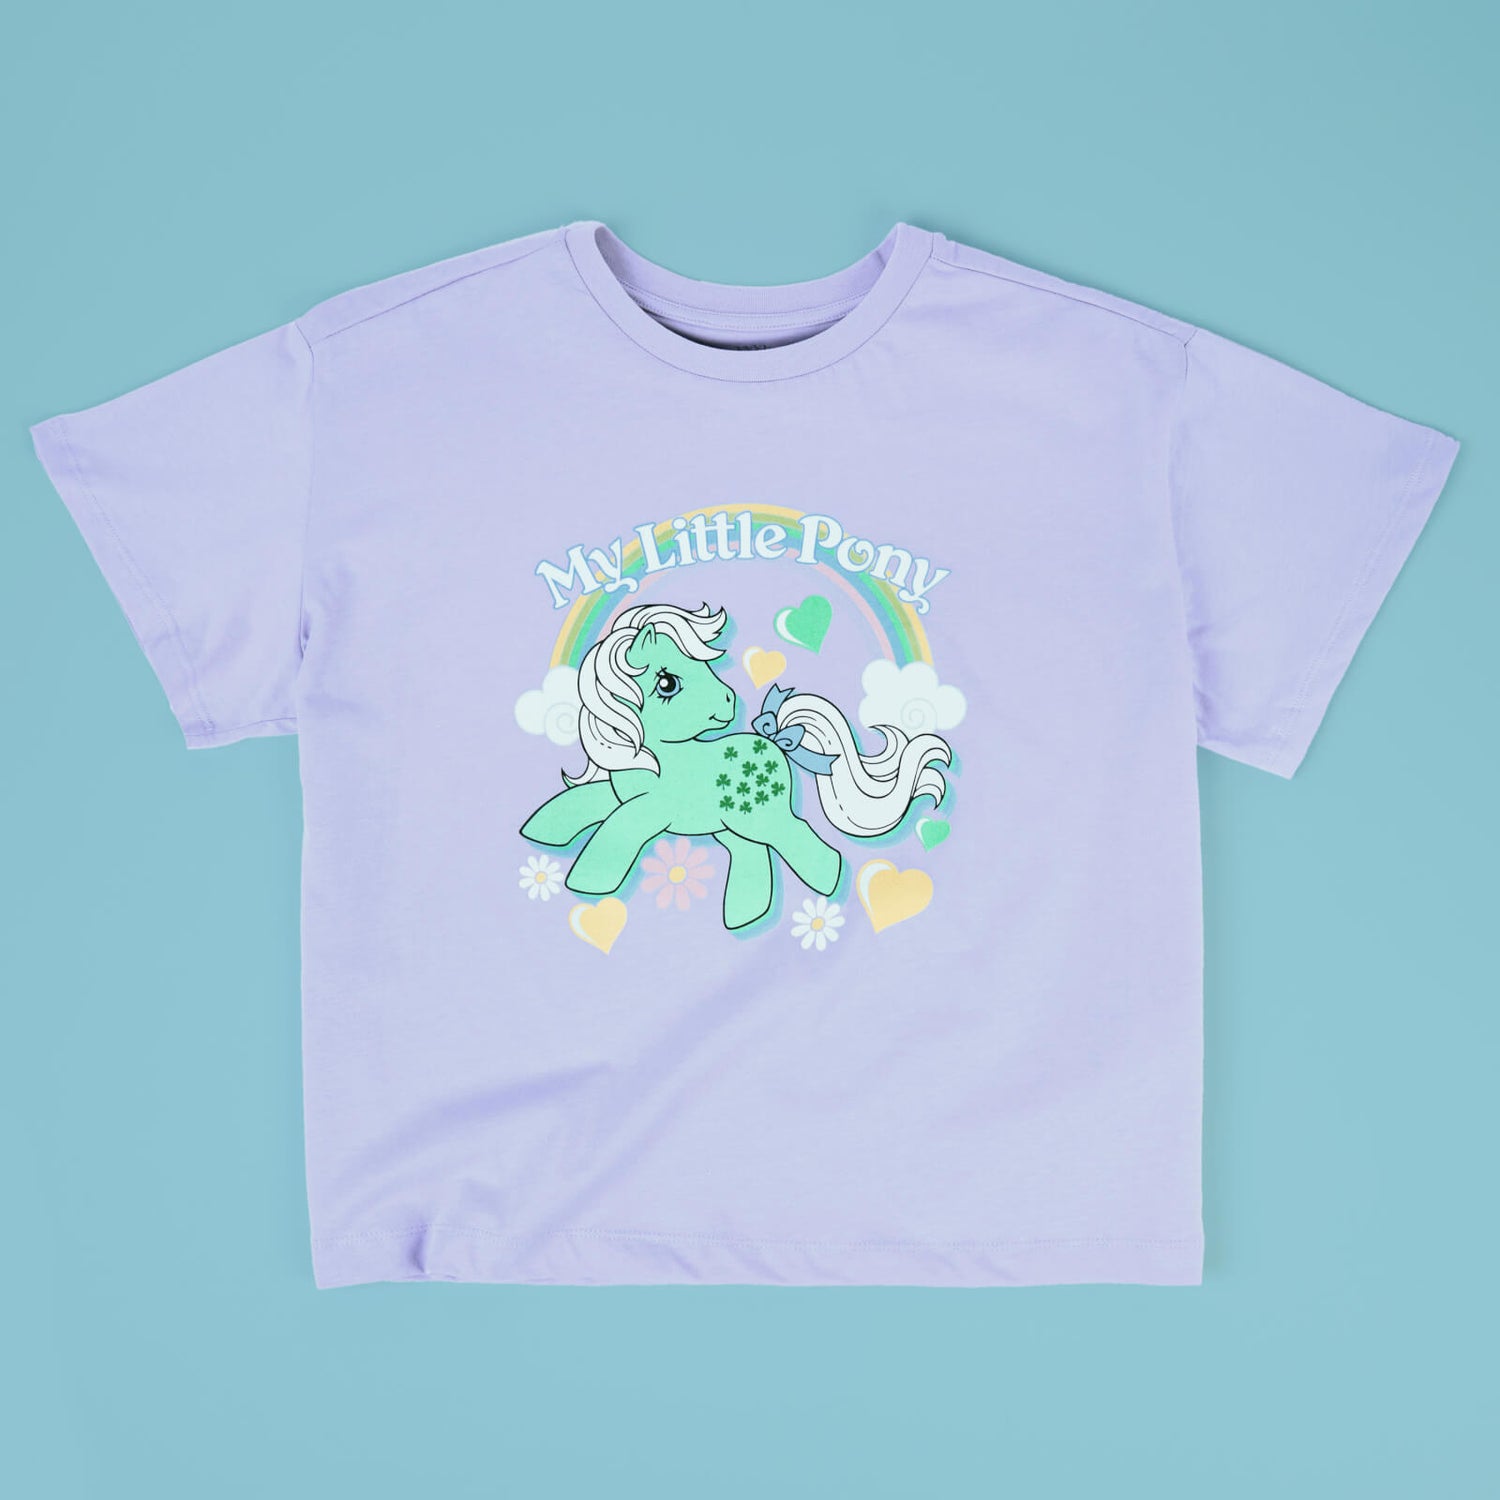 My Little Pony Minty Retro Women's Cropped T-Shirt - Lilac